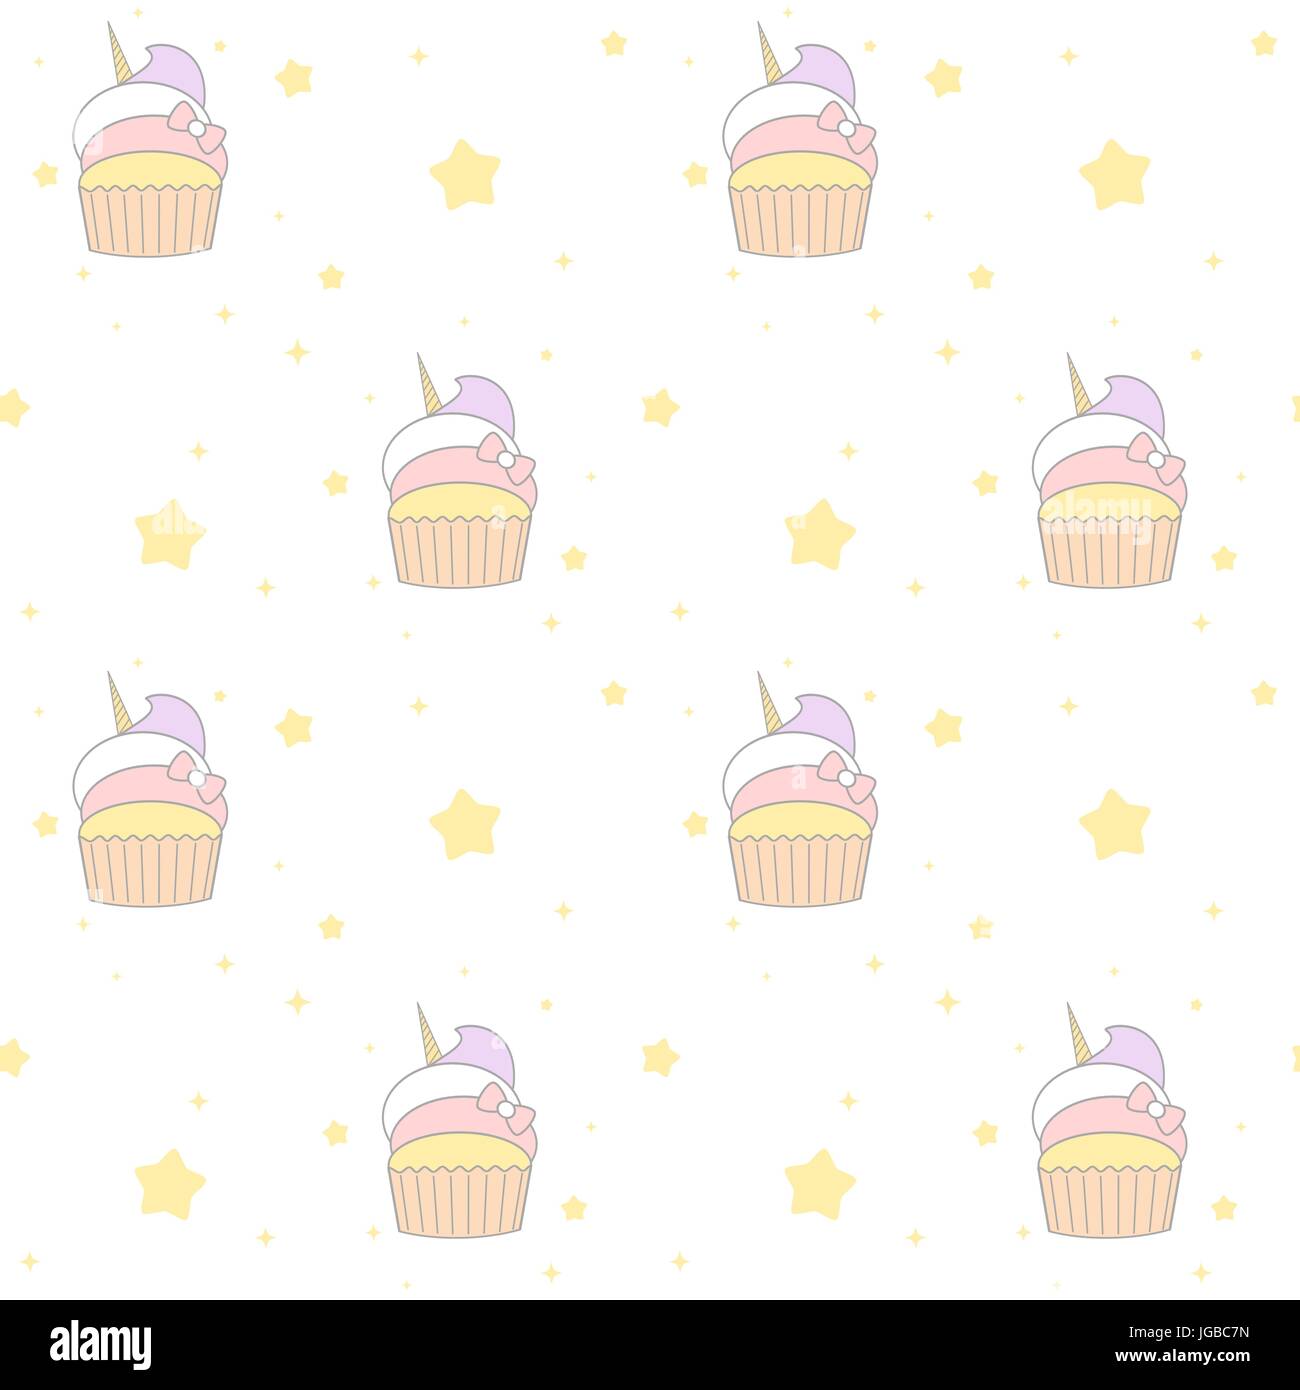 Cute Cartoon Unicorn Cupcake Seamless Vector Pattern Background